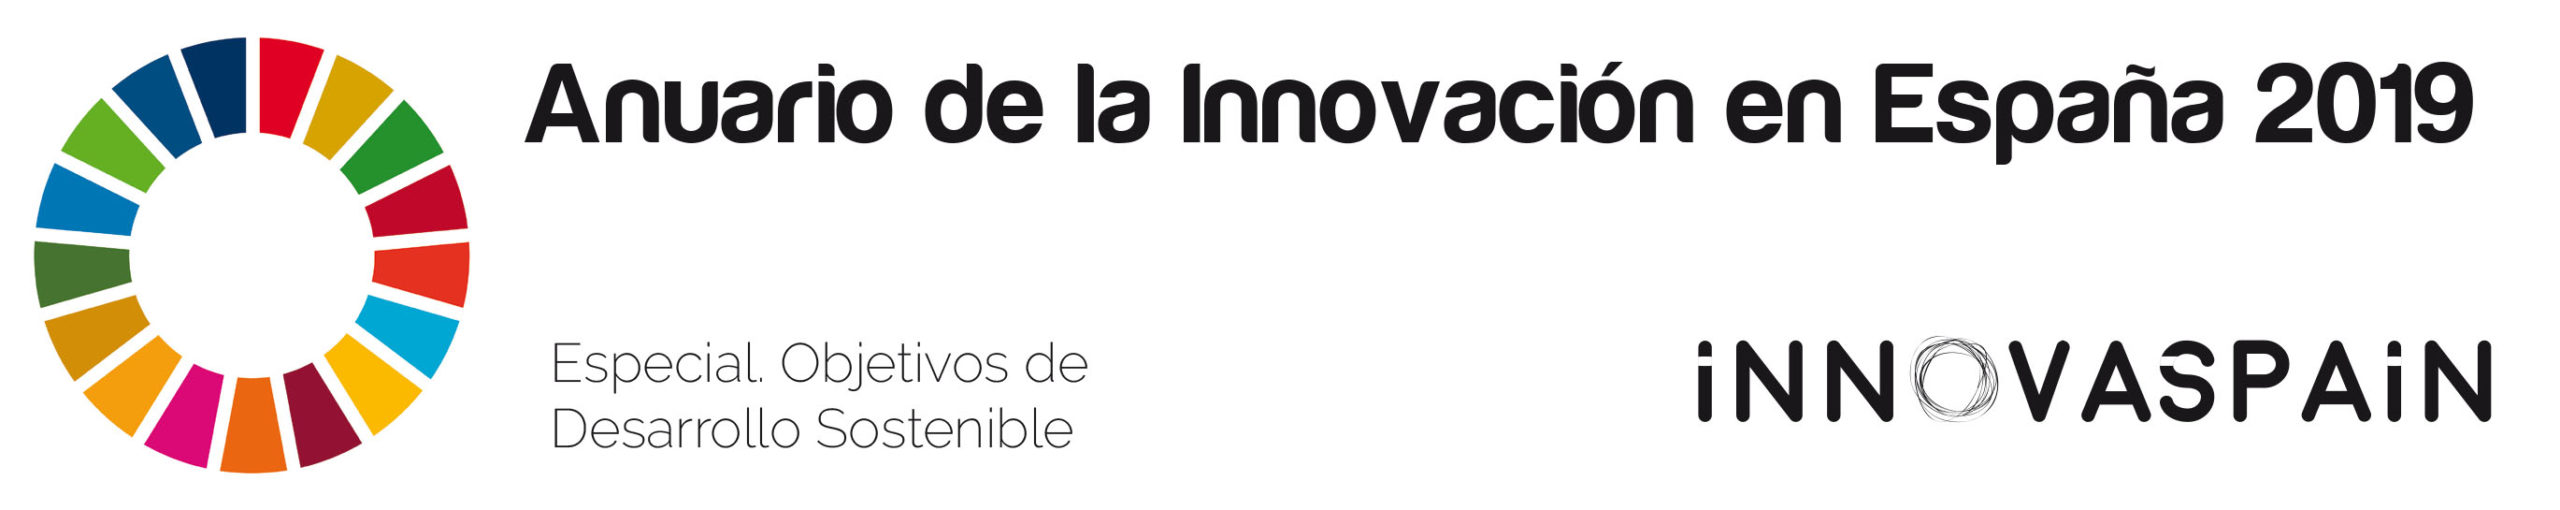 Anuario de la innovación en España 2019